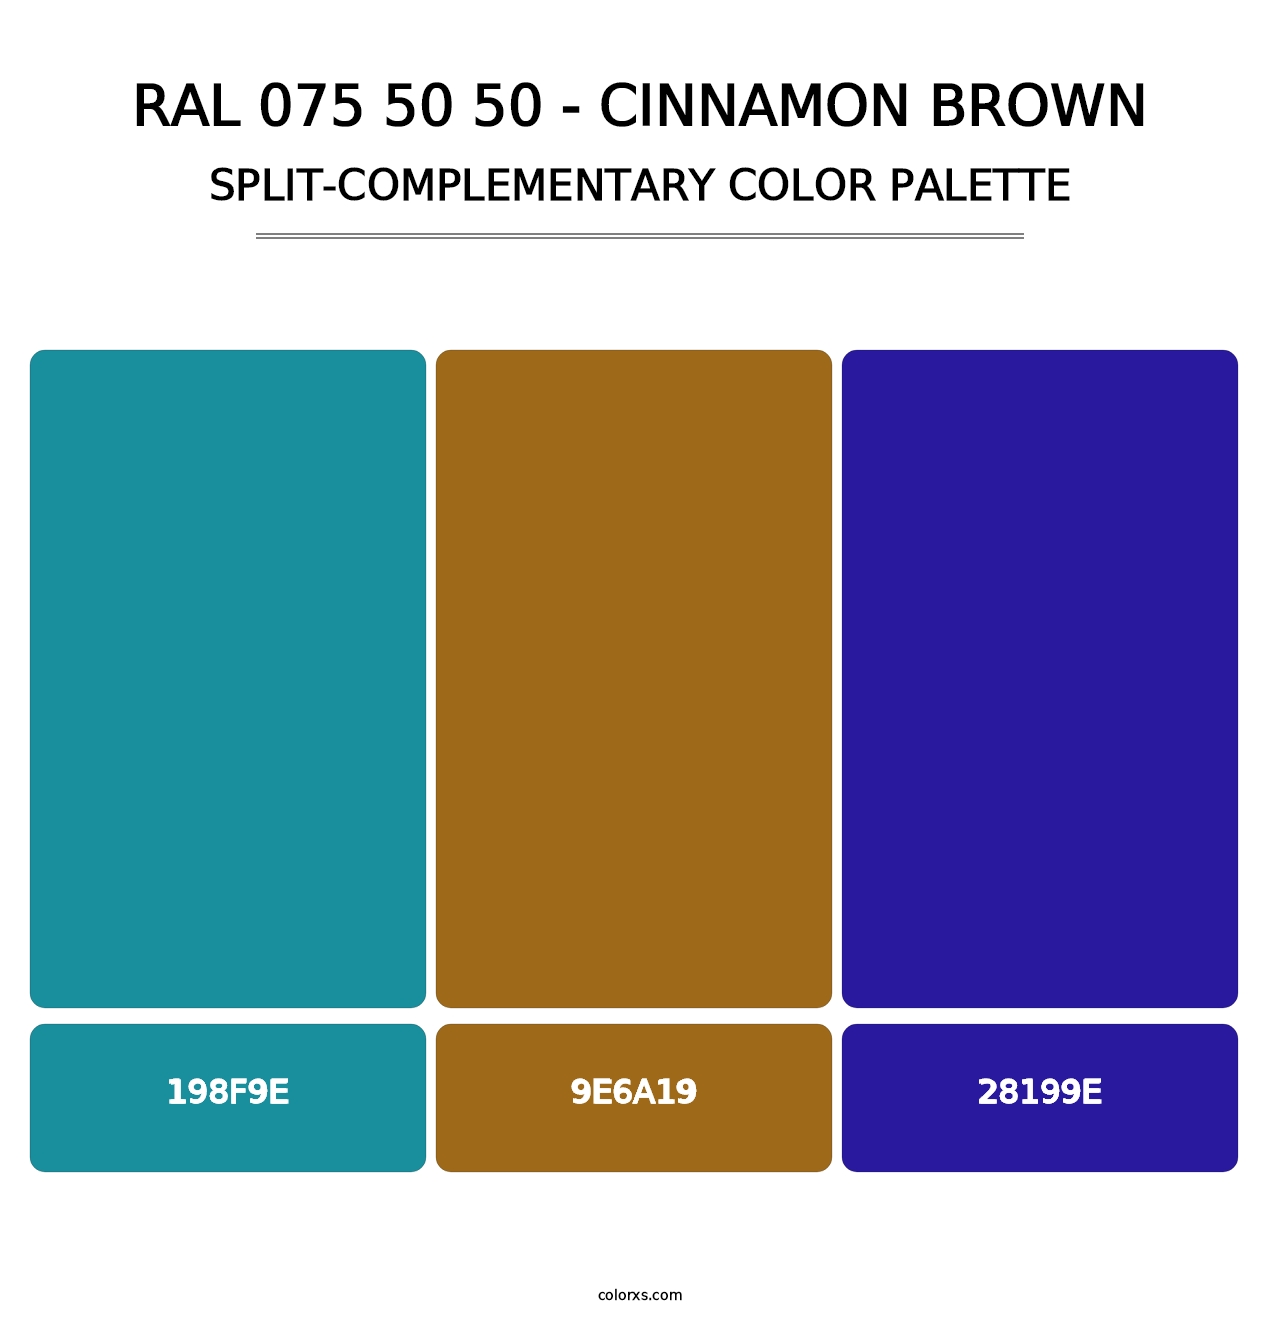 RAL 075 50 50 - Cinnamon Brown - Split-Complementary Color Palette